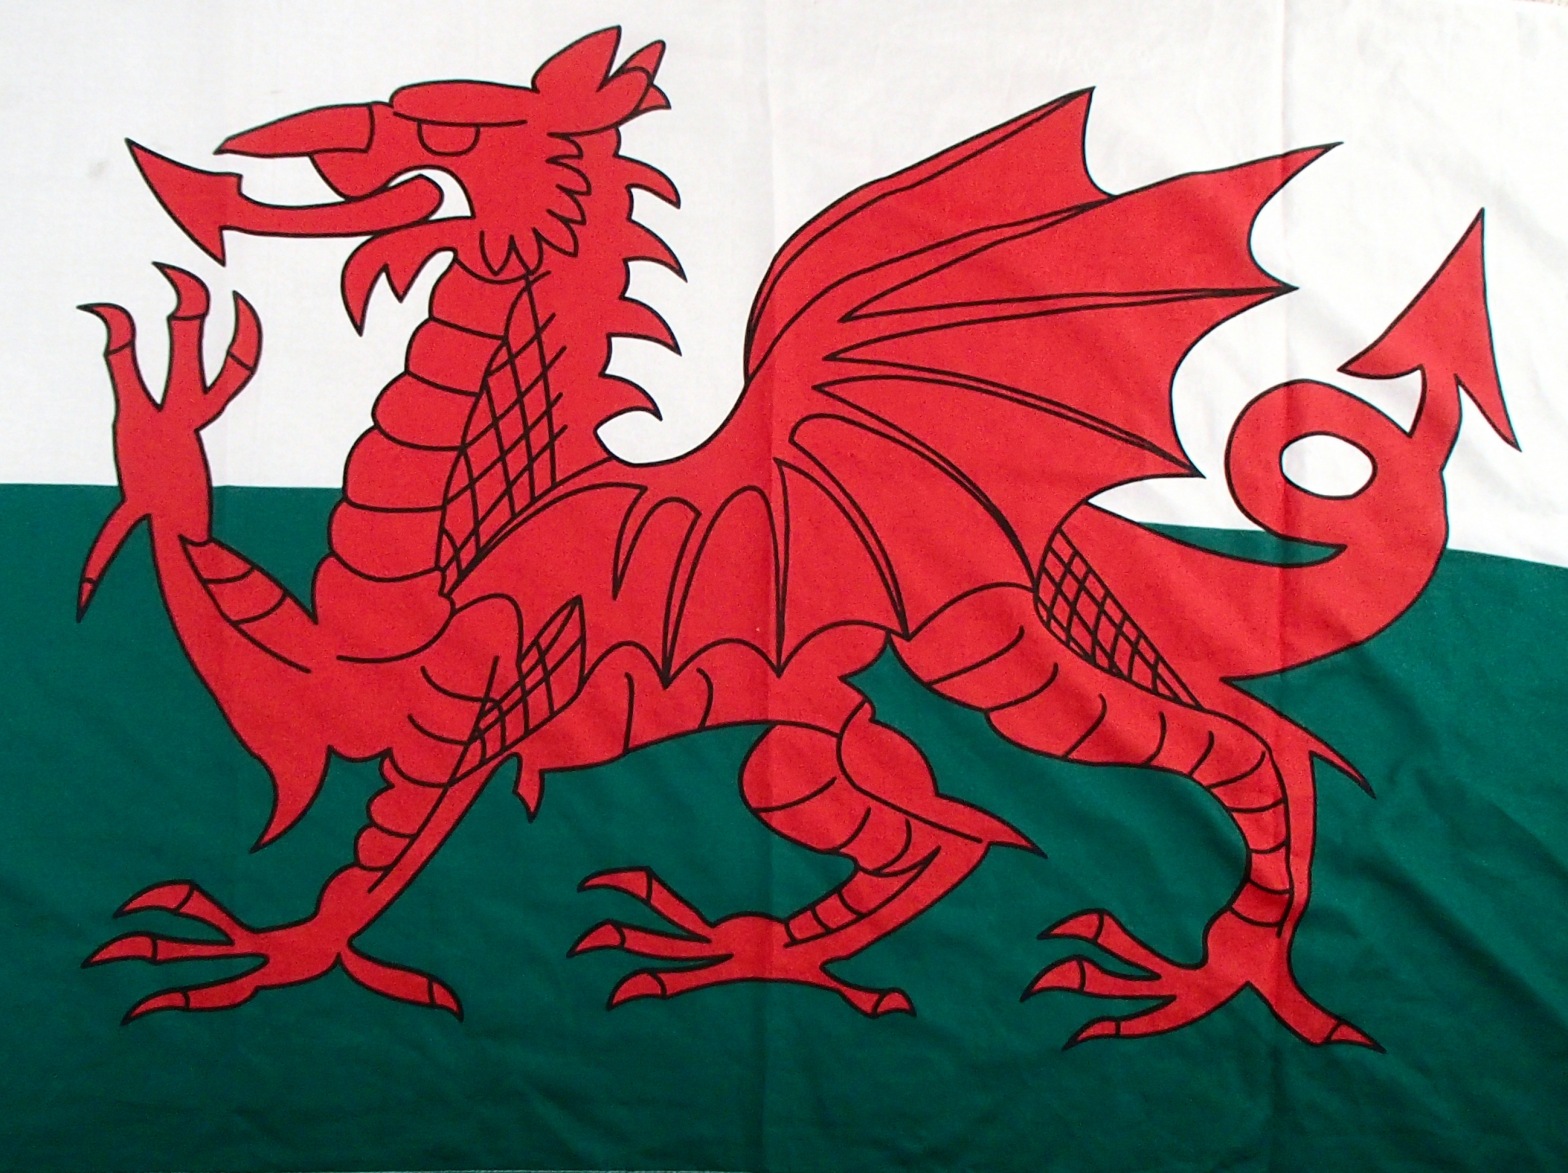 Welsh dragon